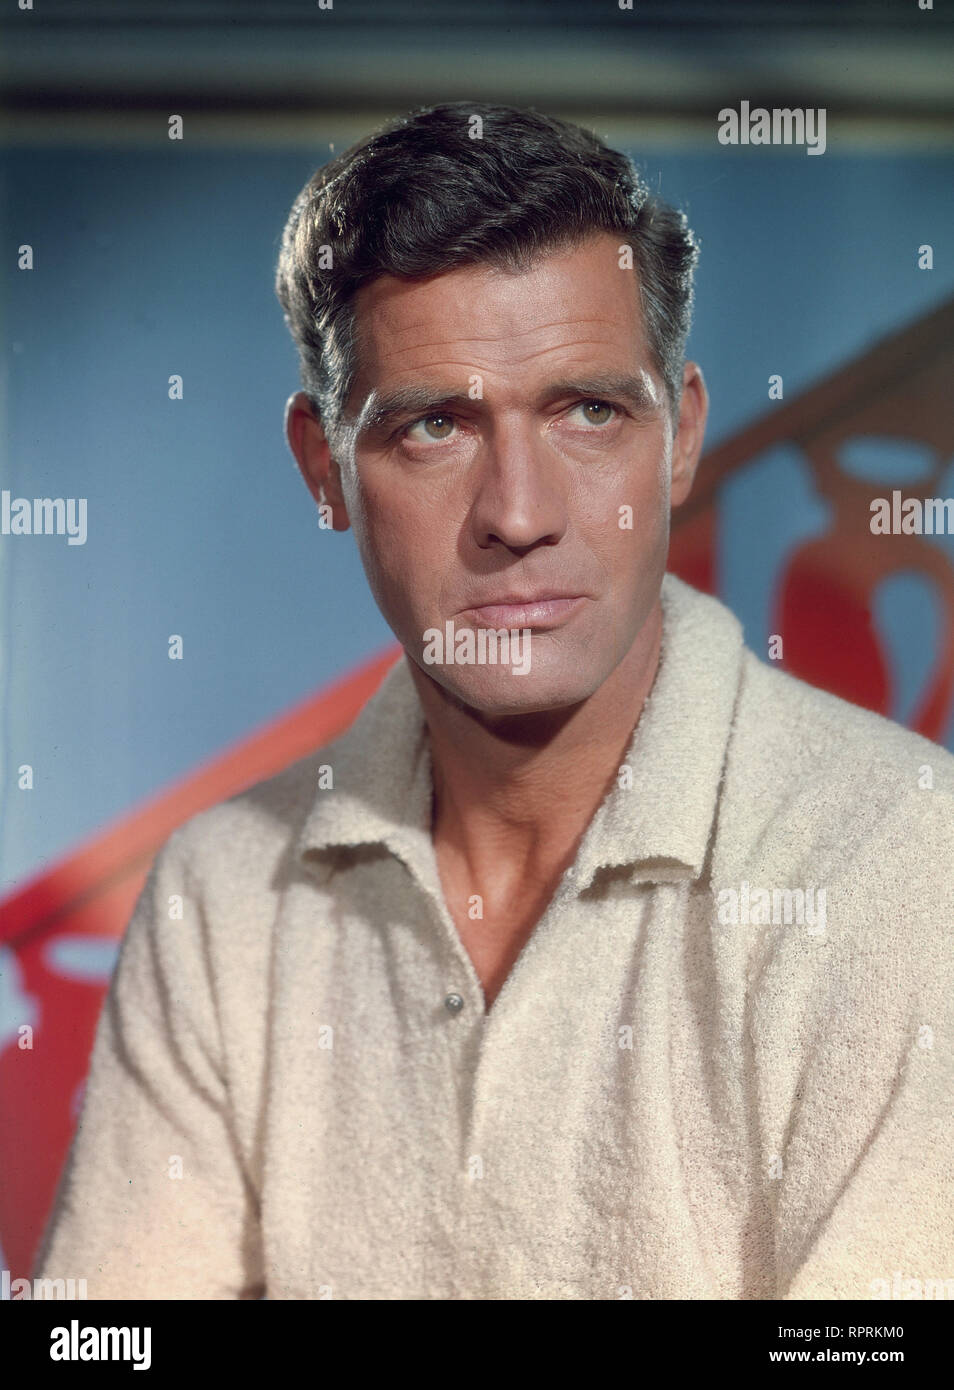 Paul Hubschmid - Schweizer Schauspieler - Studioaufnahme zum Film: Marili, 1959. Swiss actor Paul Hubschmid, Studio Still, 1959. Stock Photo